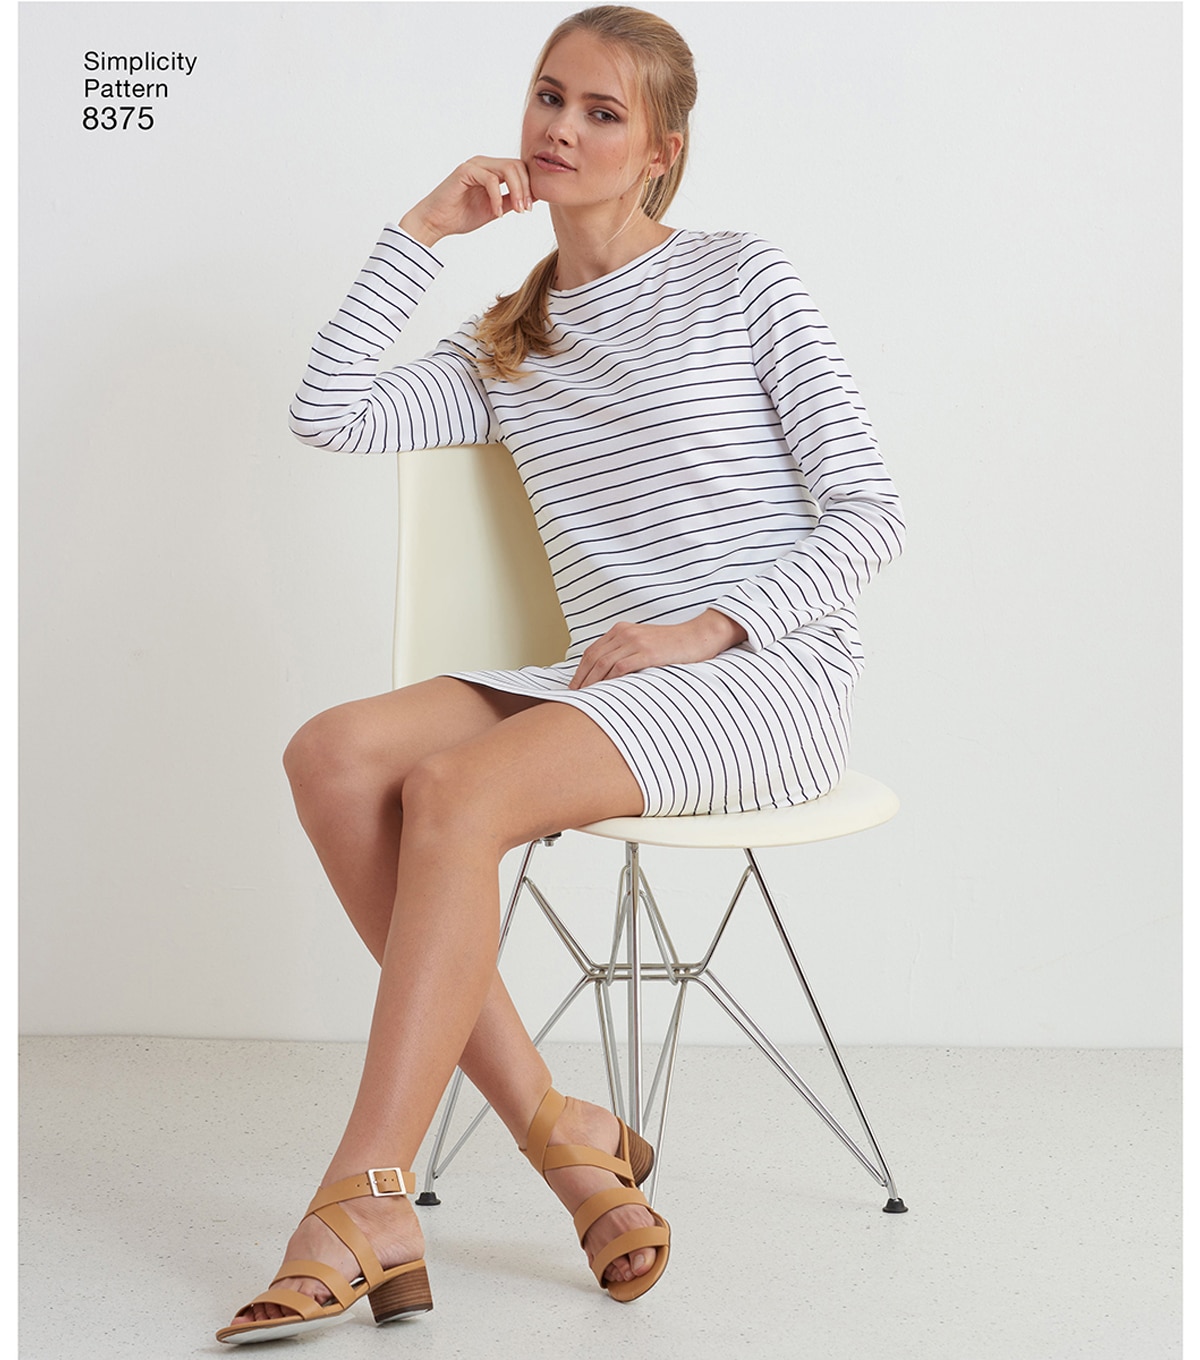 Simplicity Pattern 8375 Misses' Knit Dress or Top-Size A (XXS-XXL)